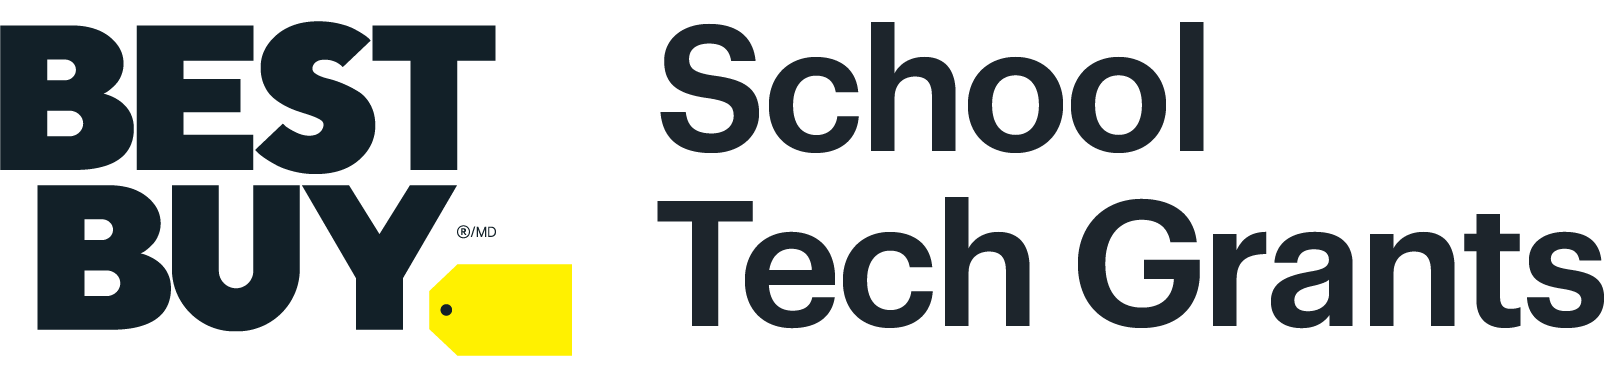 Best Buy School Tech Grants